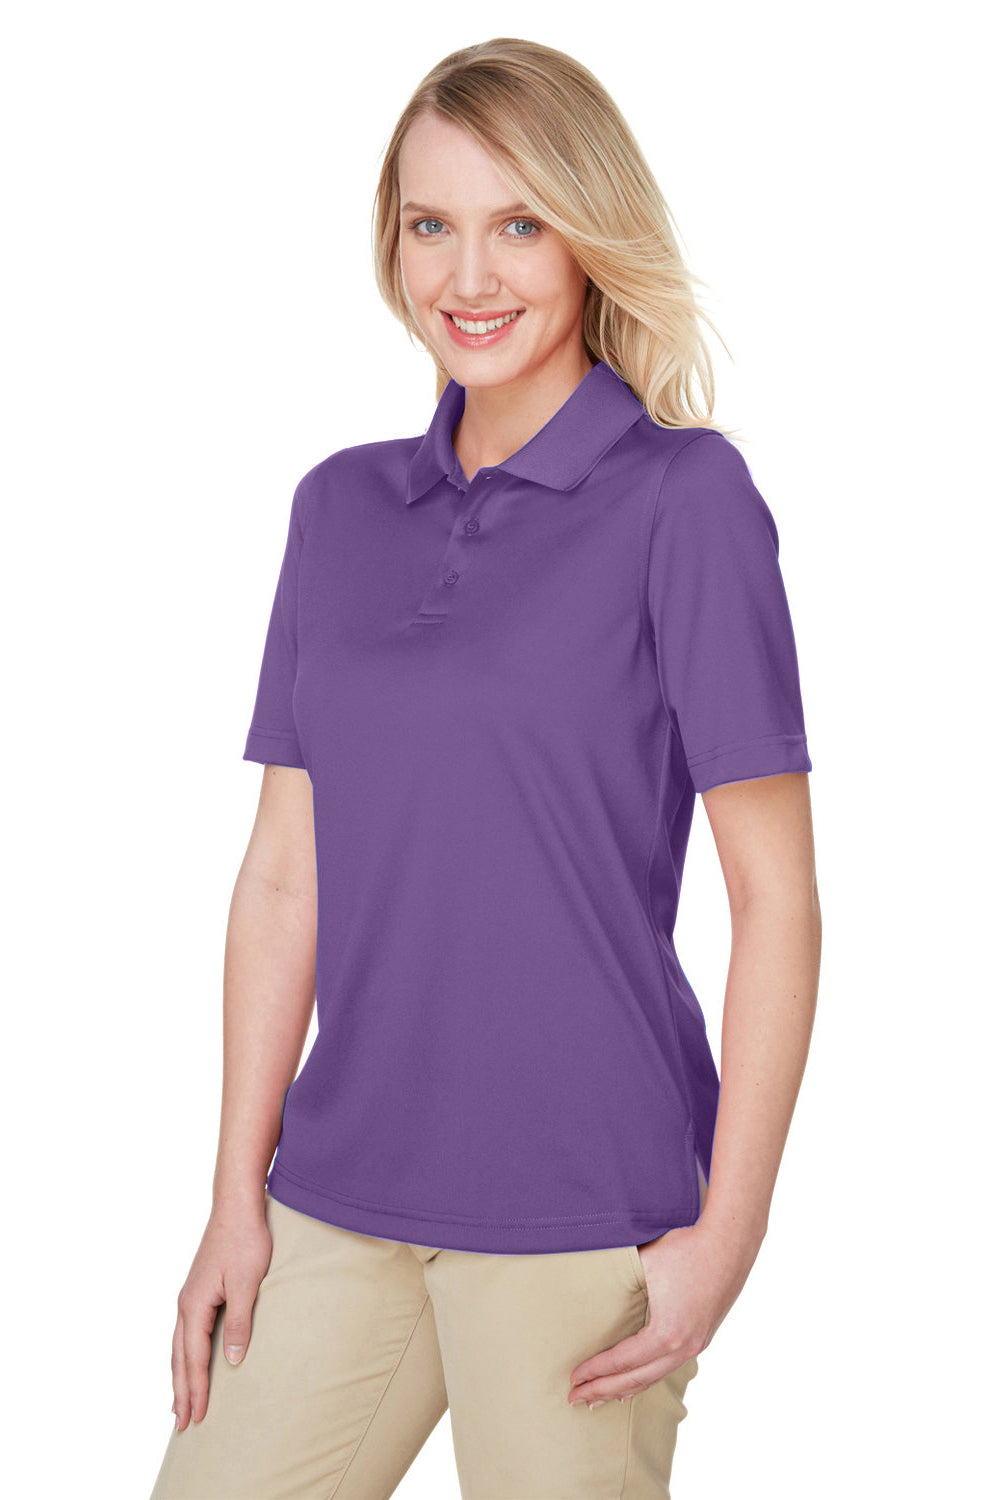 Harriton M348W Womens Advantage Performance Moisture Wicking Short Sleeve Polo Shirt Team Purple 3Q